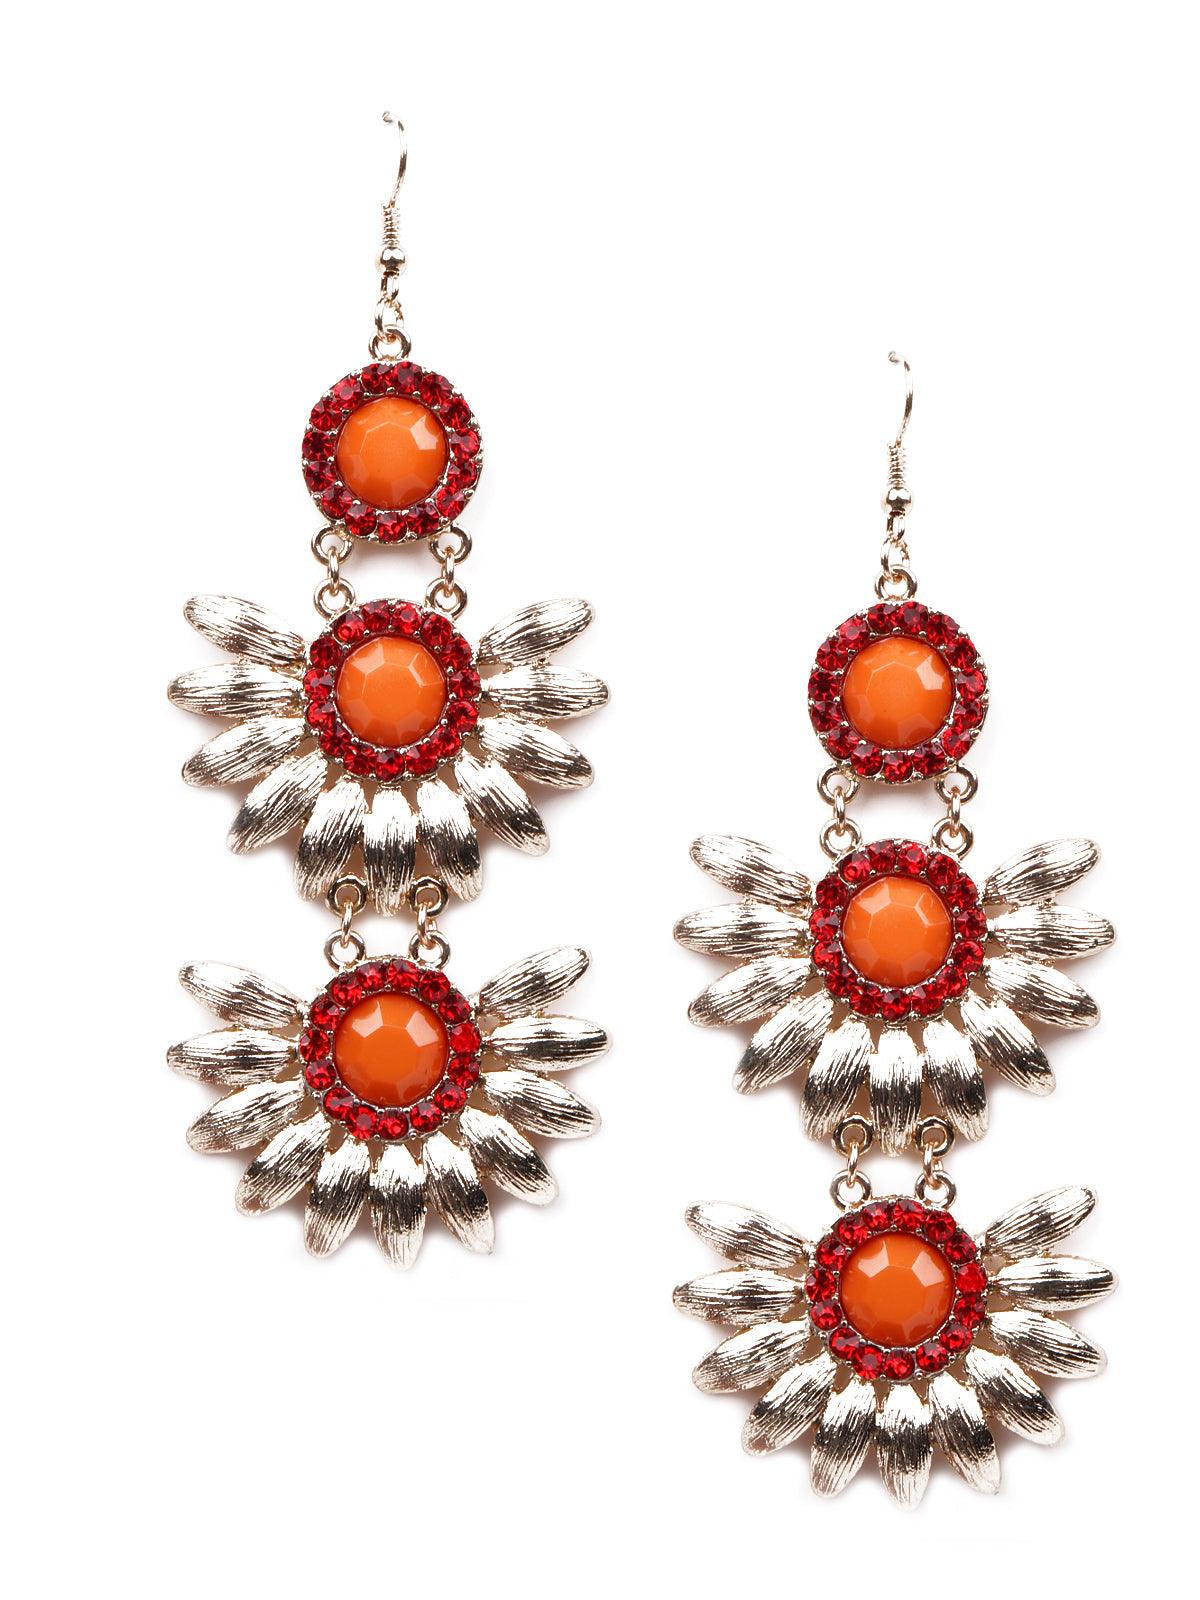 Vibrant orange floral earrings - Odette